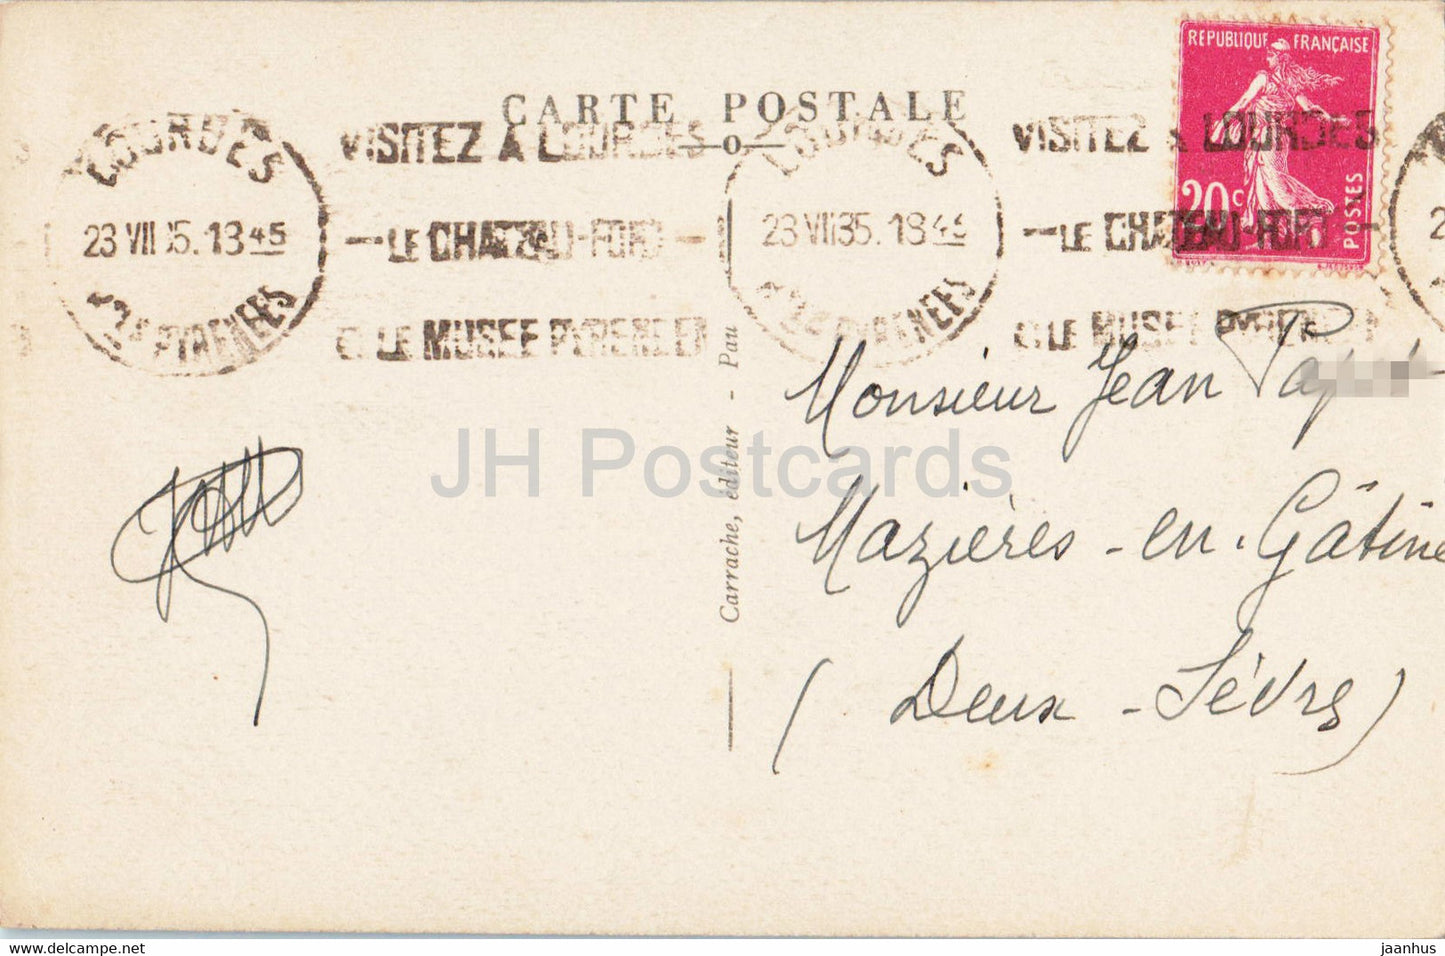 Lourdes - La Basilique - Kathedrale - 70 - alte Postkarte - 1935 - Frankreich - gebraucht